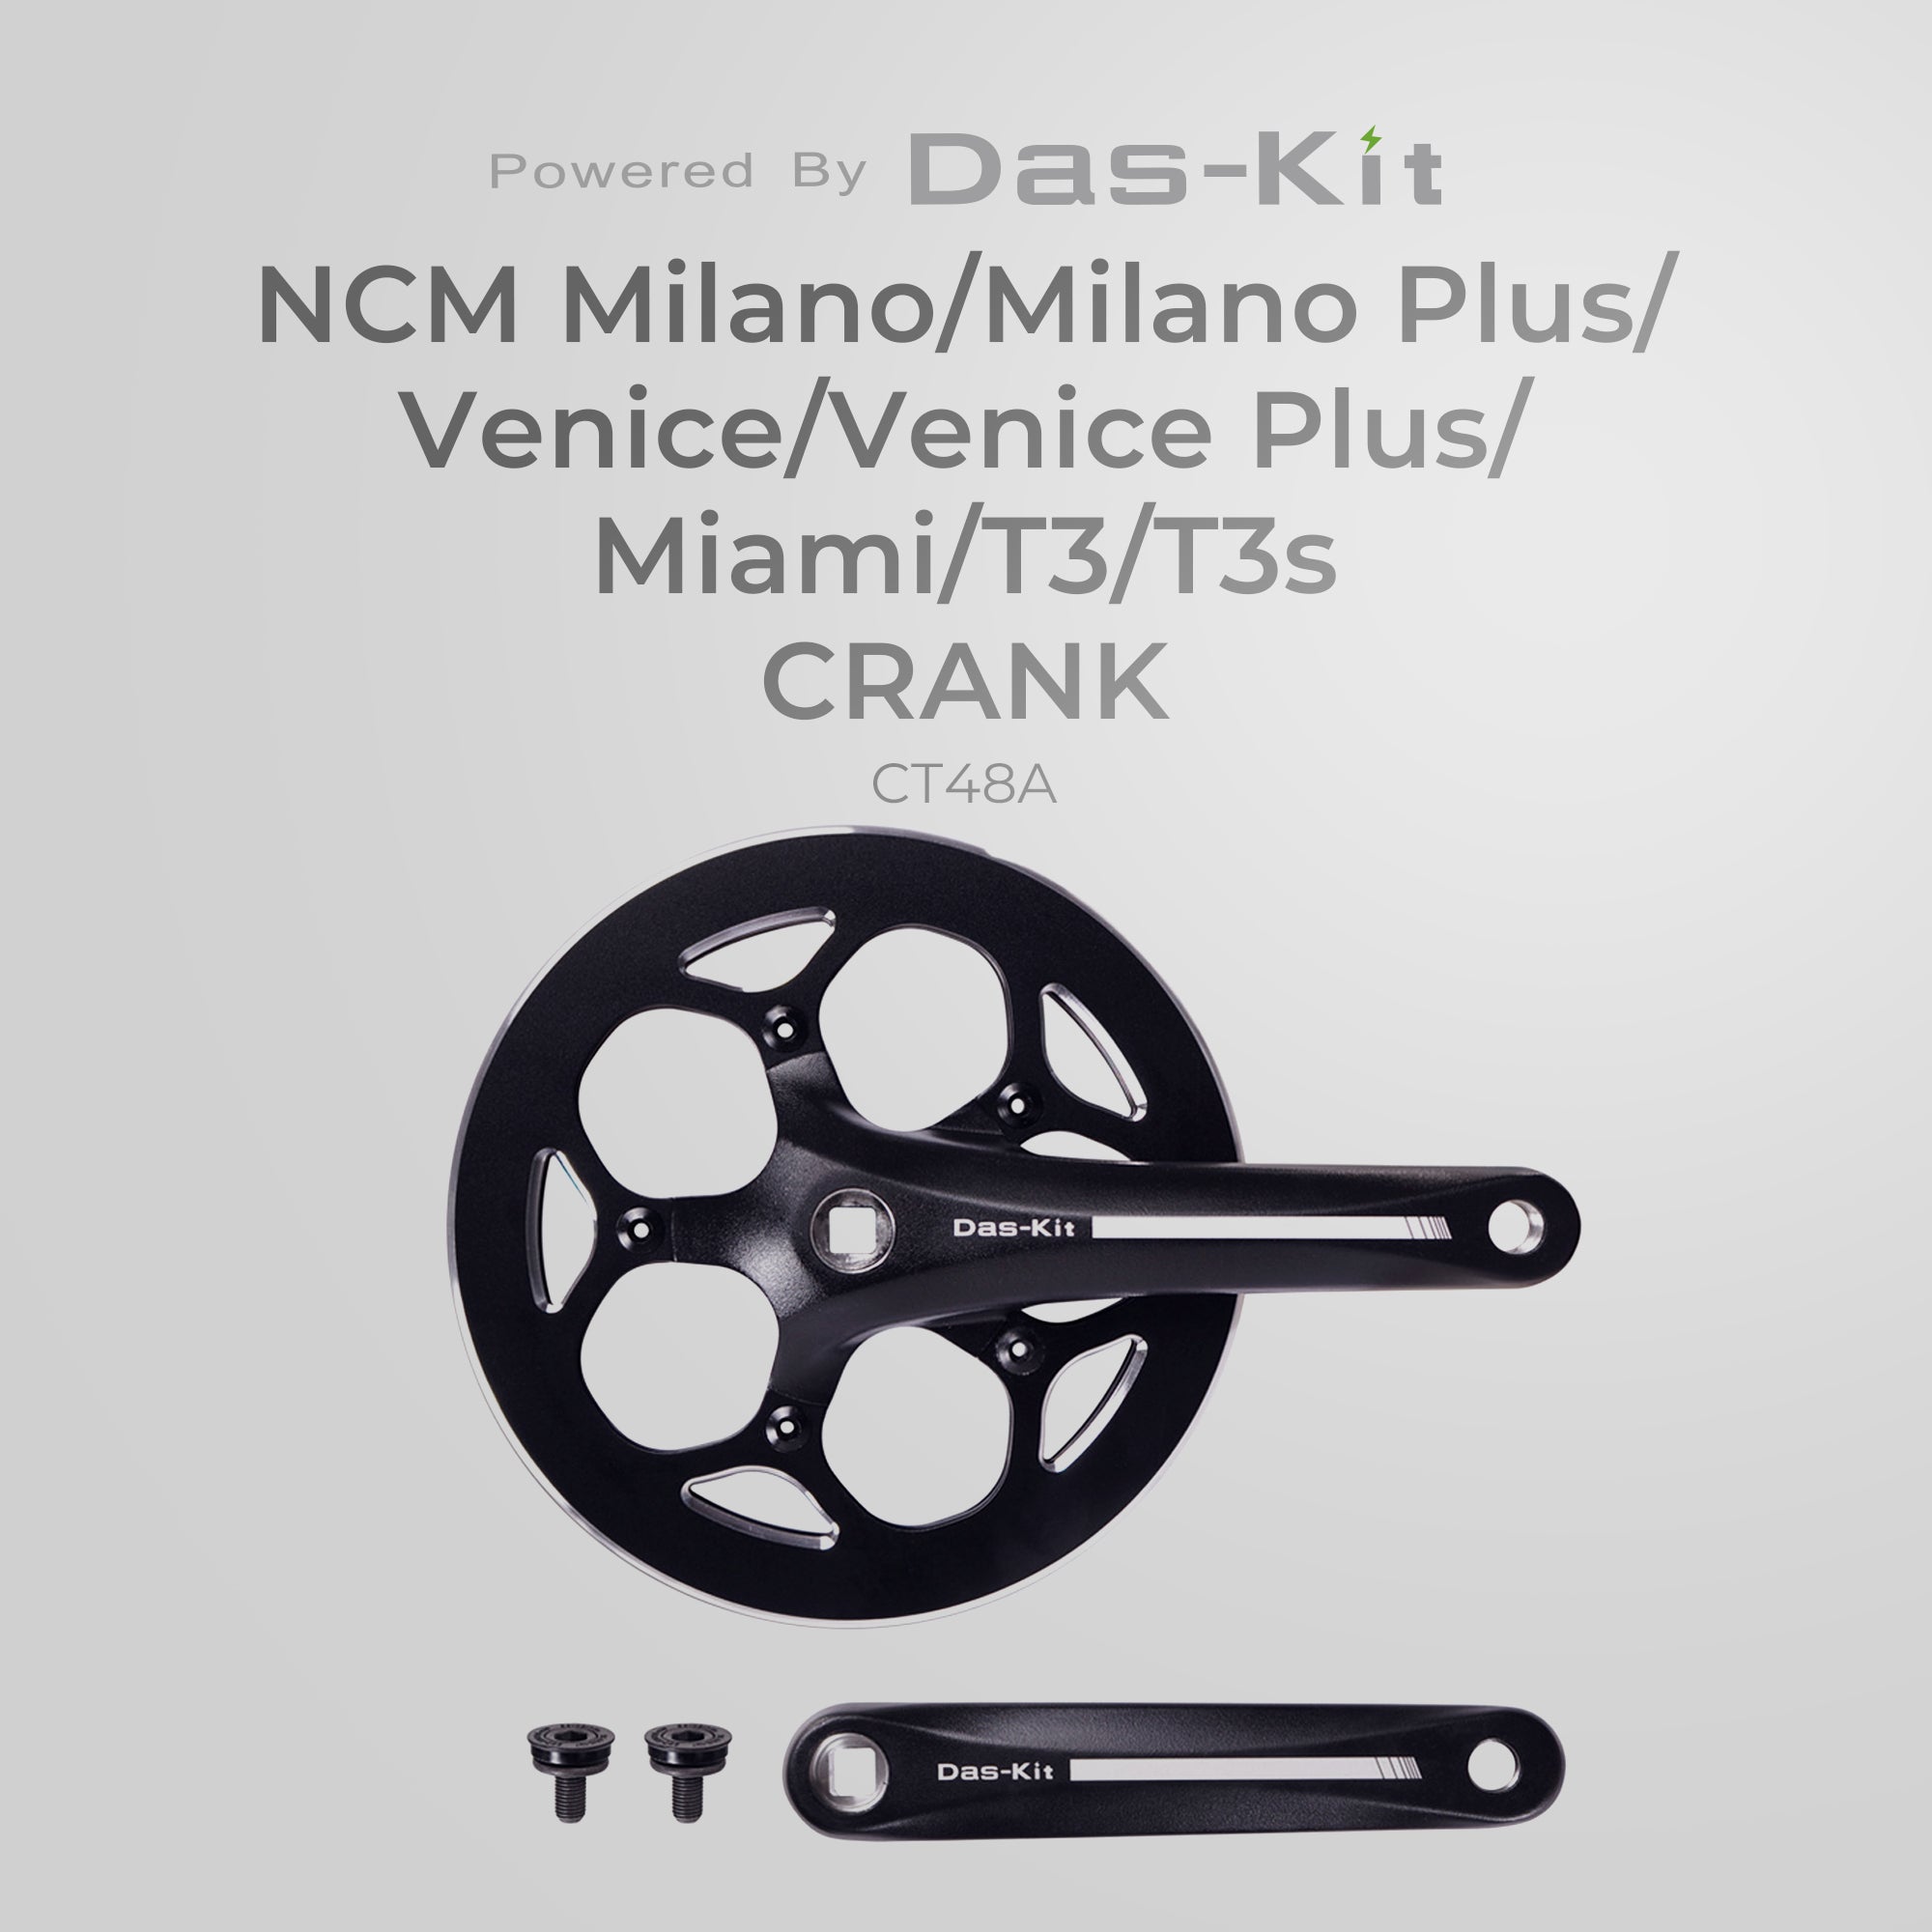 NCM Milano/Milano Plus/Venise/Venise Plus/Miami/T3/T3s Manivelle - CT48A